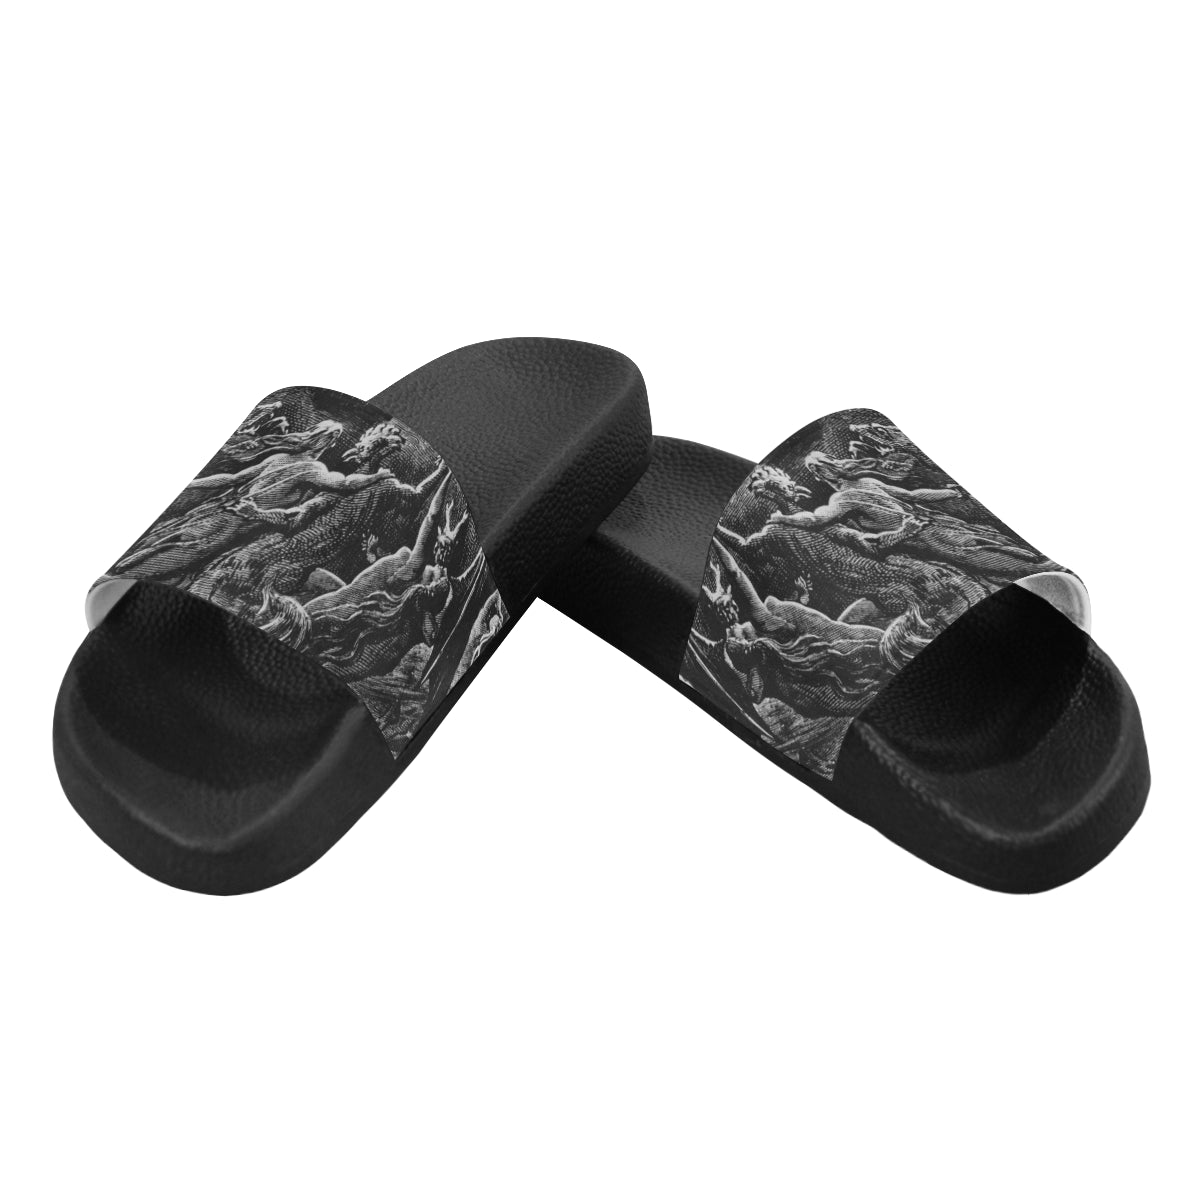 Unisex Satanic Slide Sandals - limited Edition